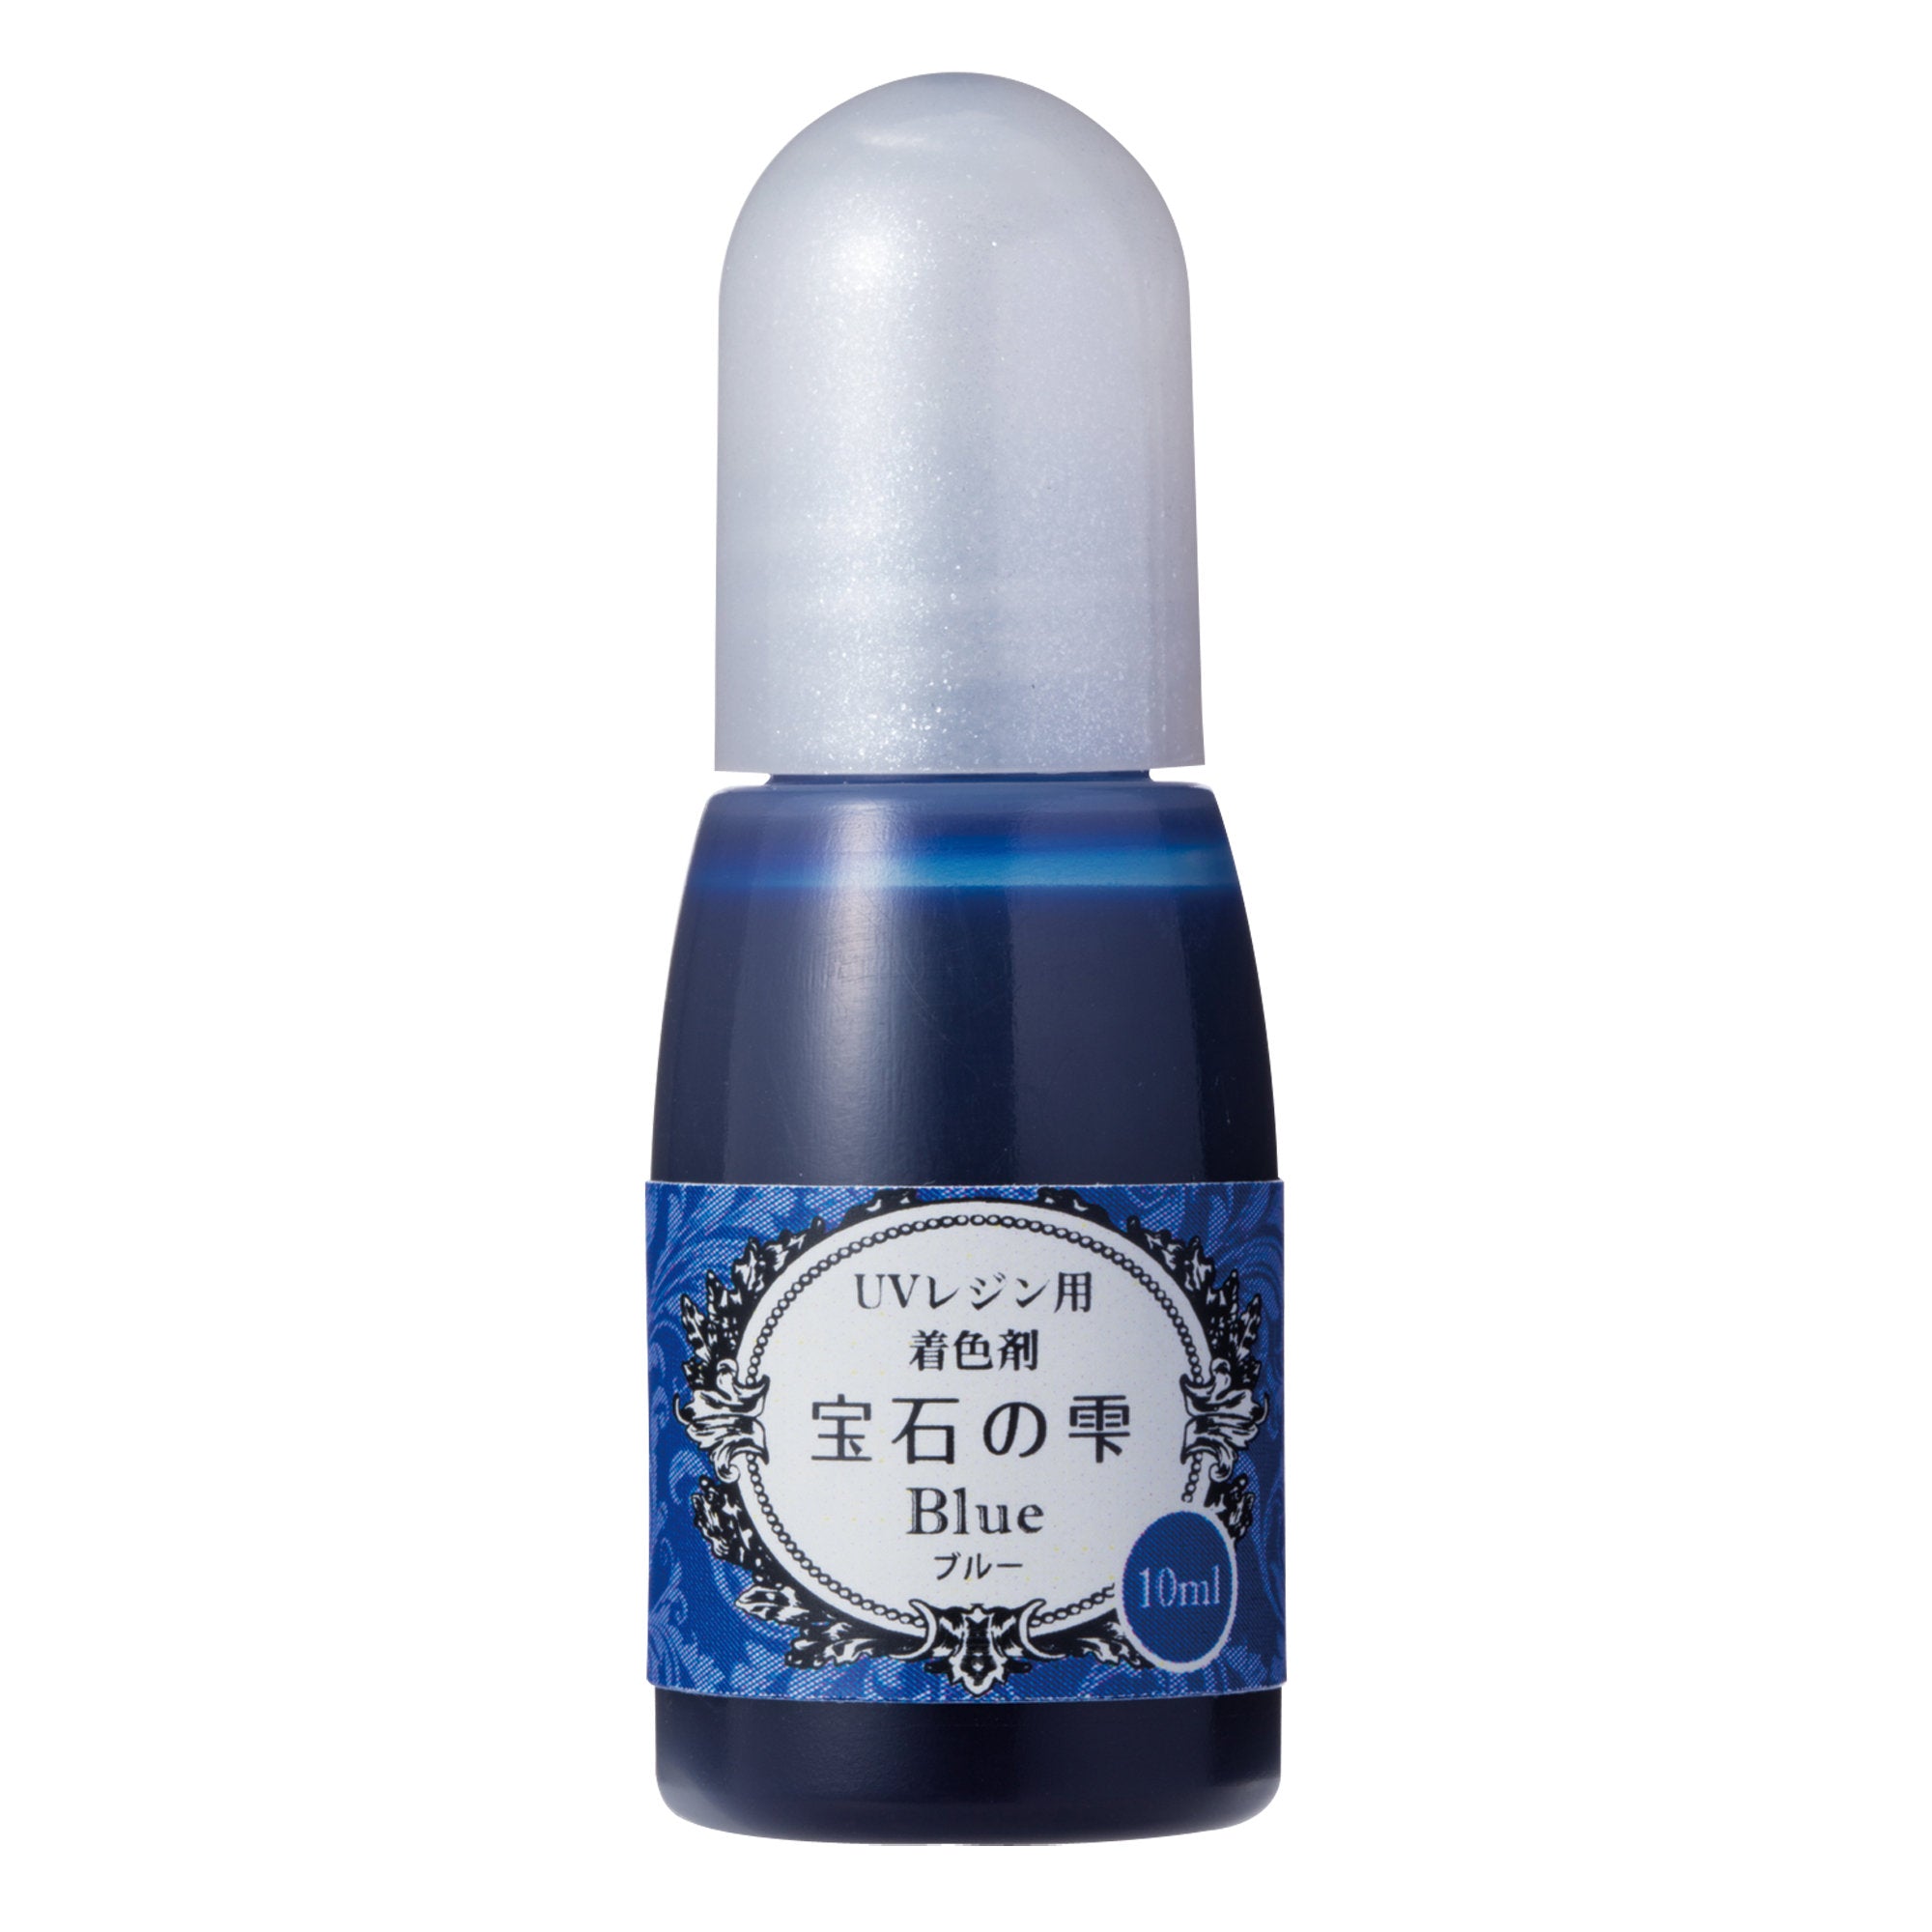 Padico Jewel Blue Pigment for UV Resin.